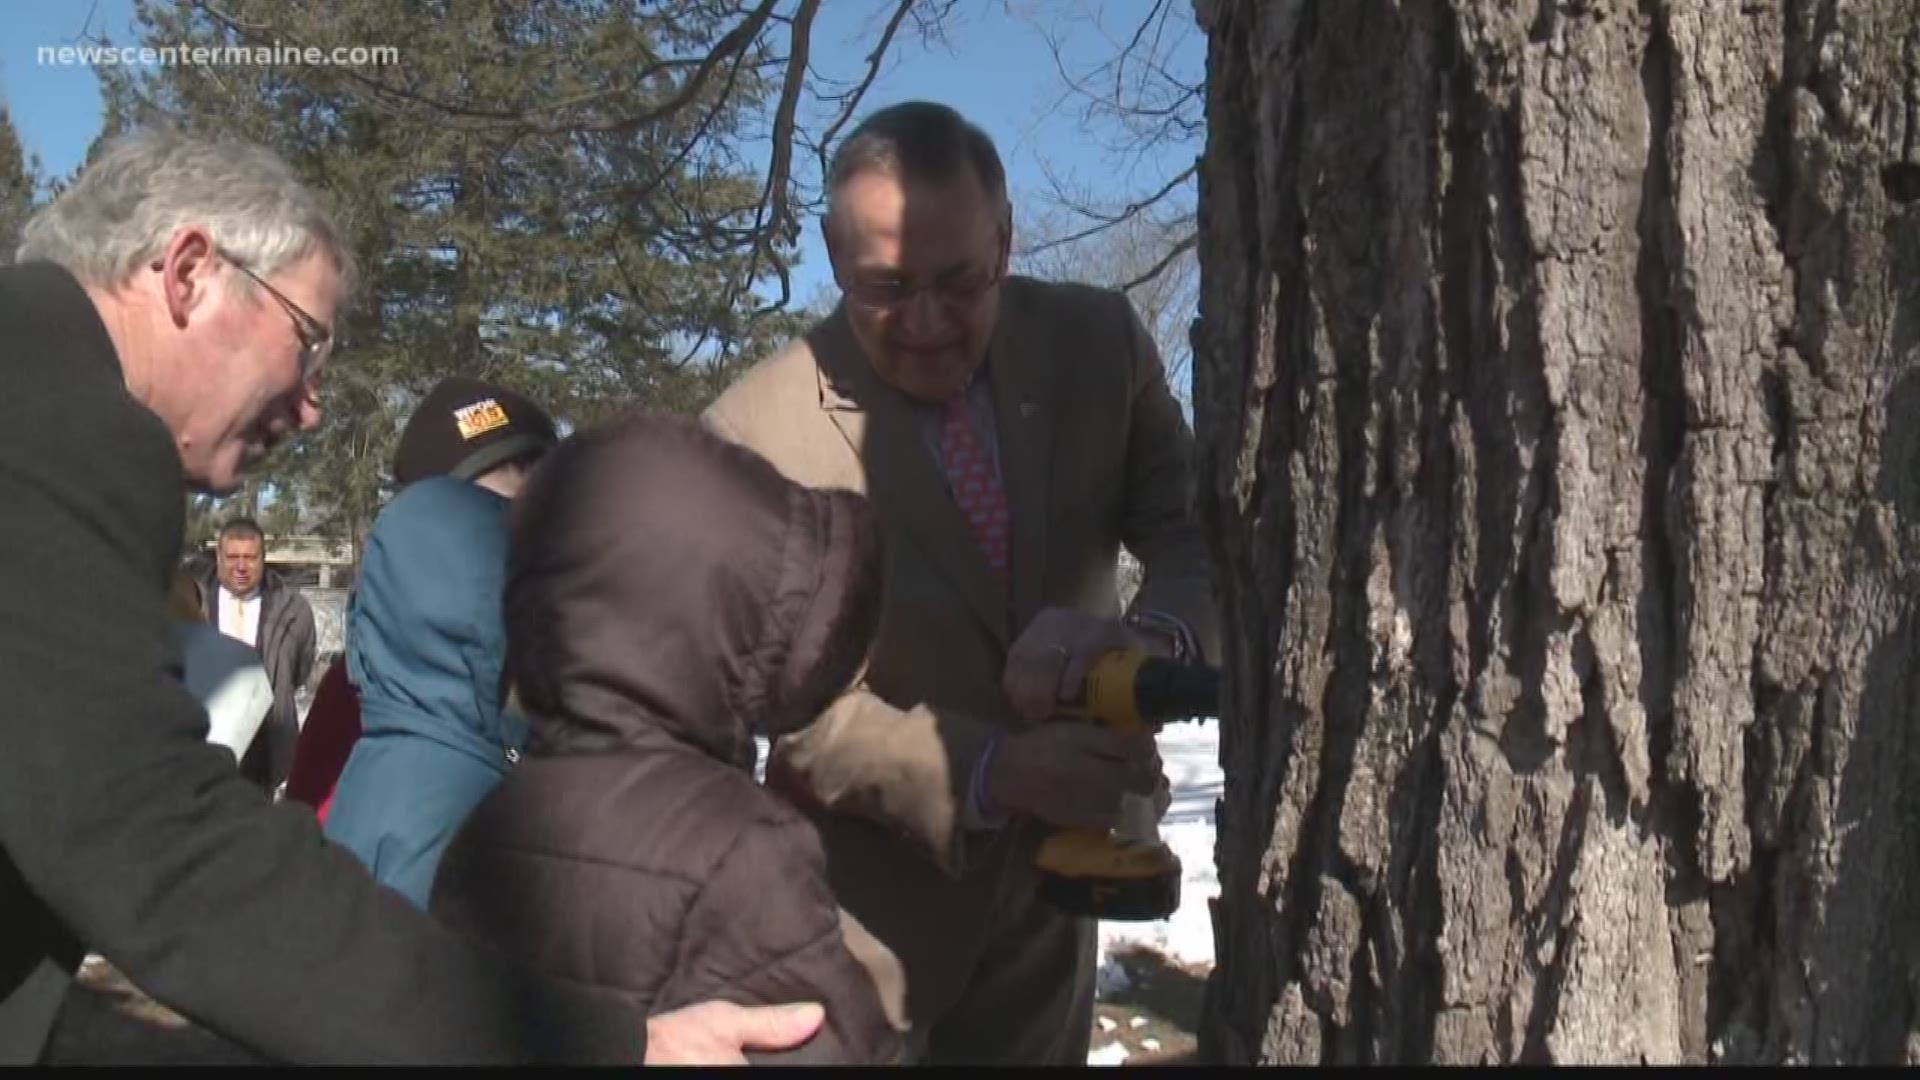 Gov. LePage taps maple tree at Blaine House